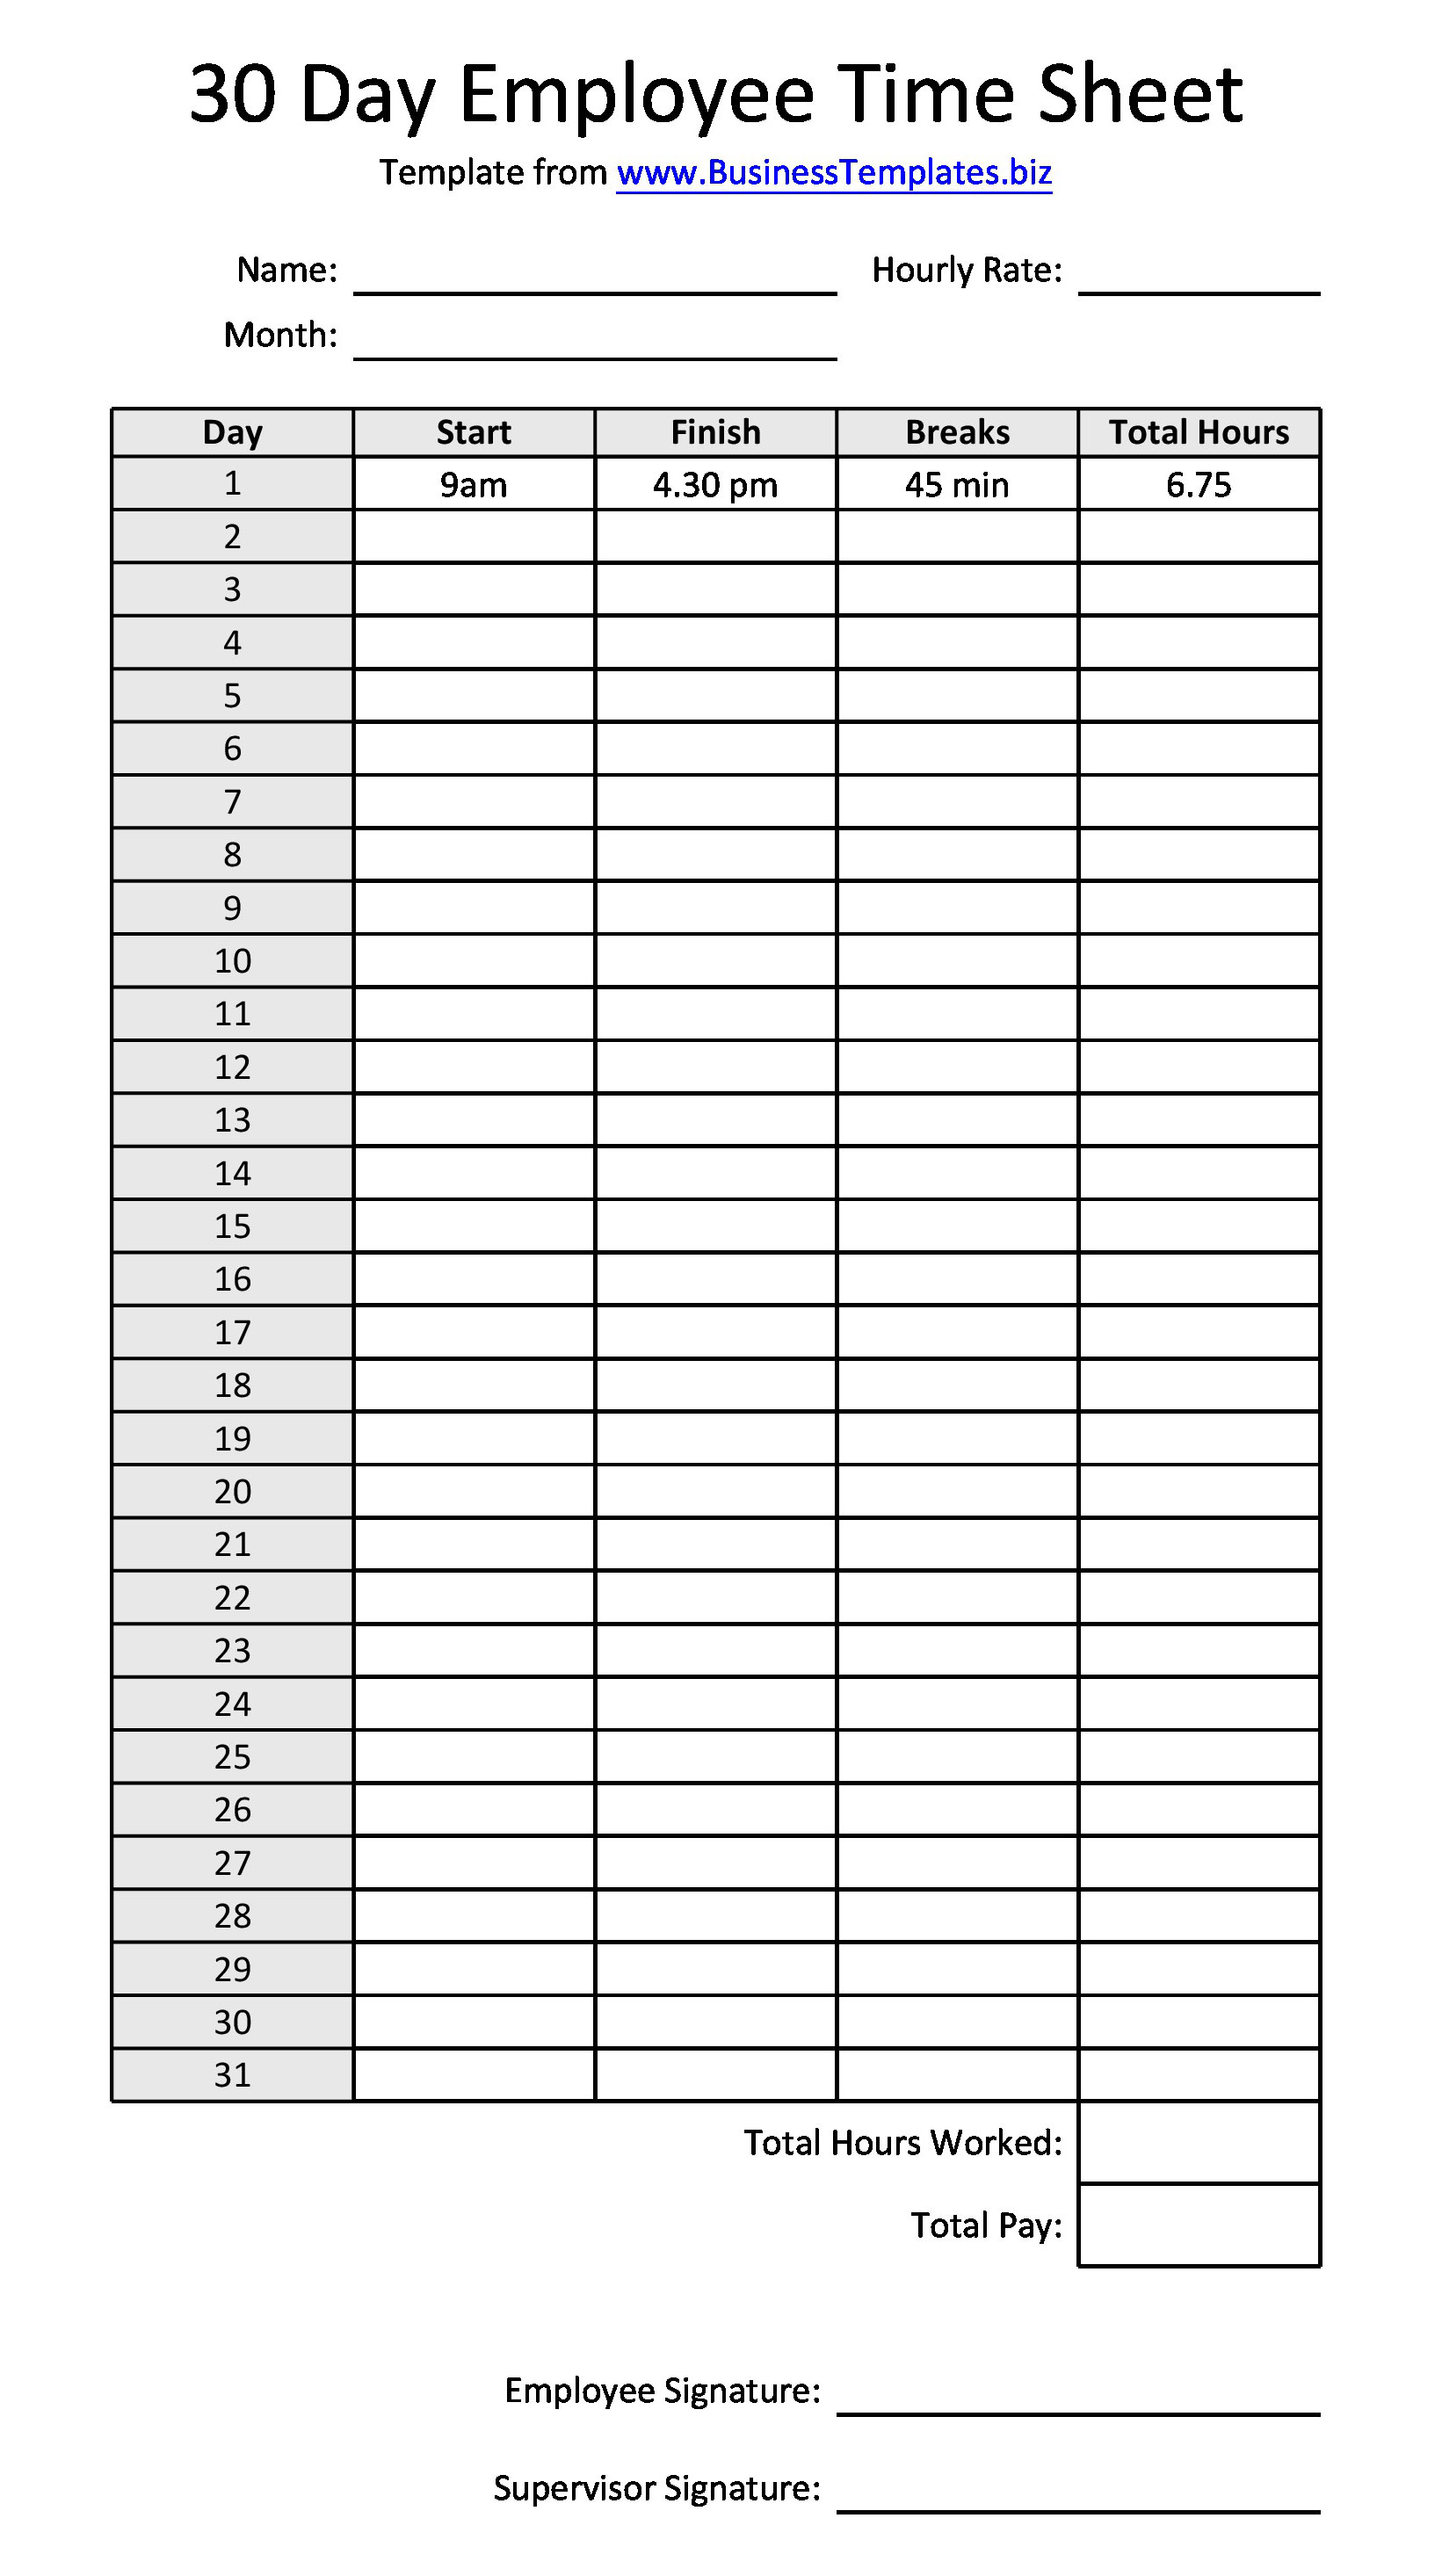 30 Day Employee Time Sheet